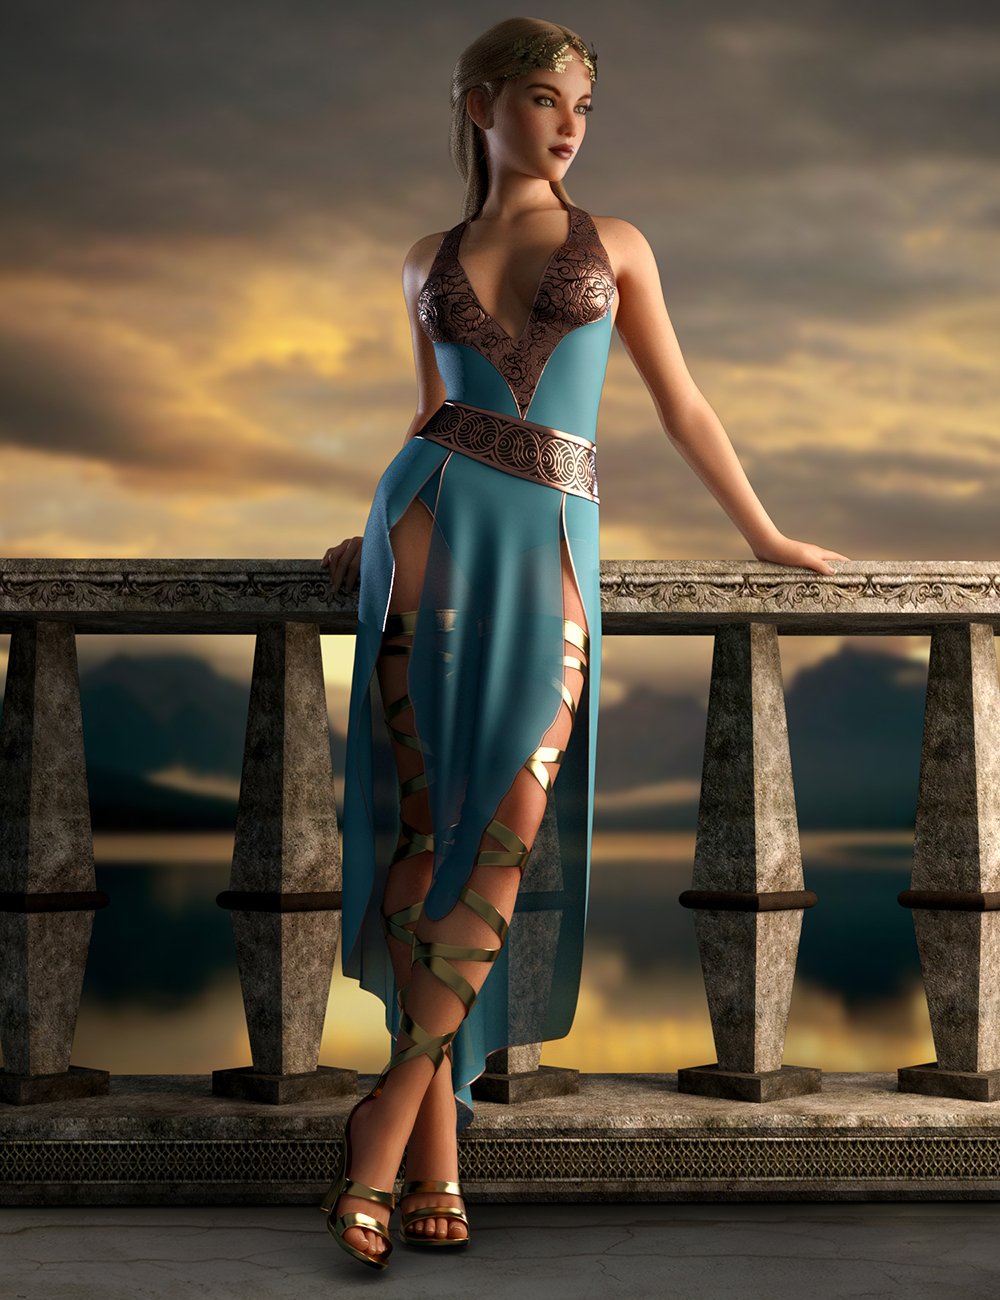 dForce Greek Princess Outfit Set for Genesis 8 and 8.1 Females by: Mytilus3dLab, 3D Models by Daz 3D